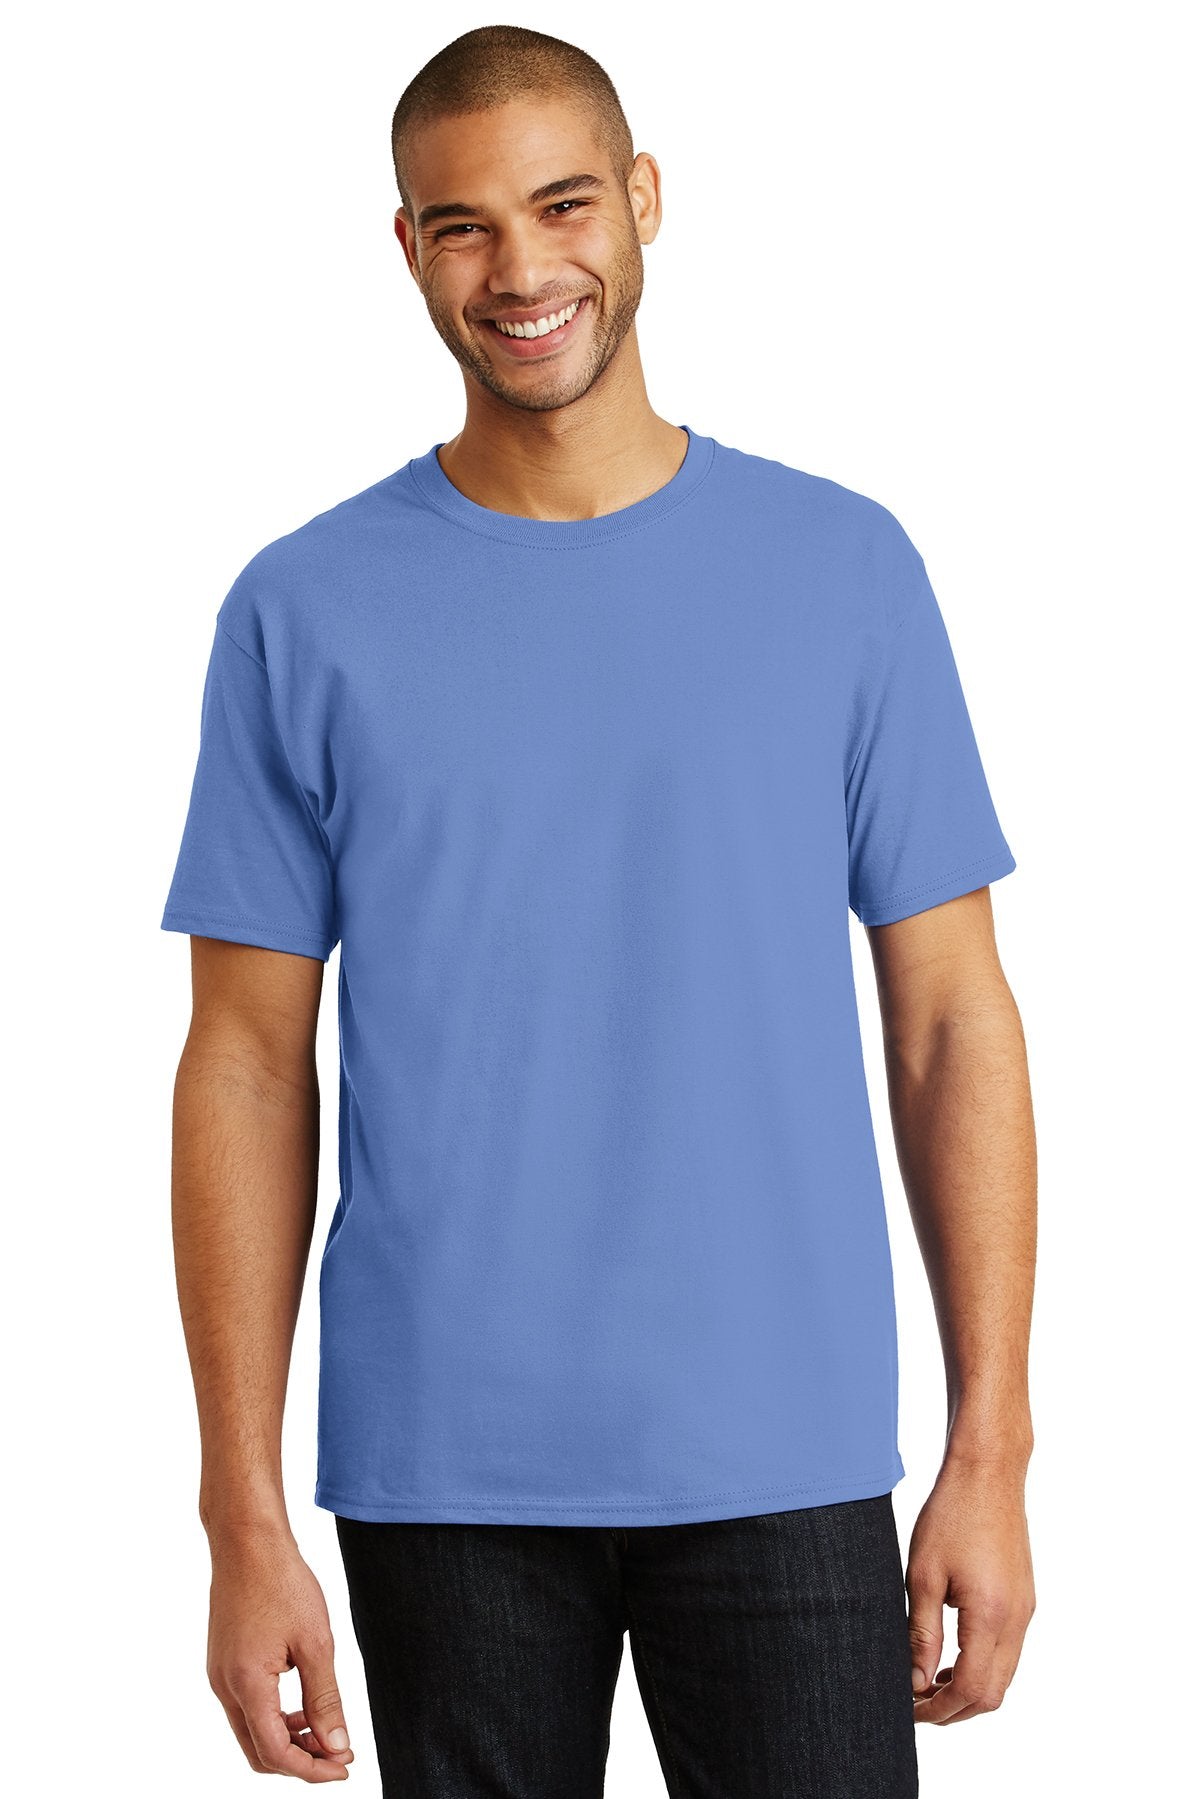 hanes tagless cotton t shirt 5250 carolina blue